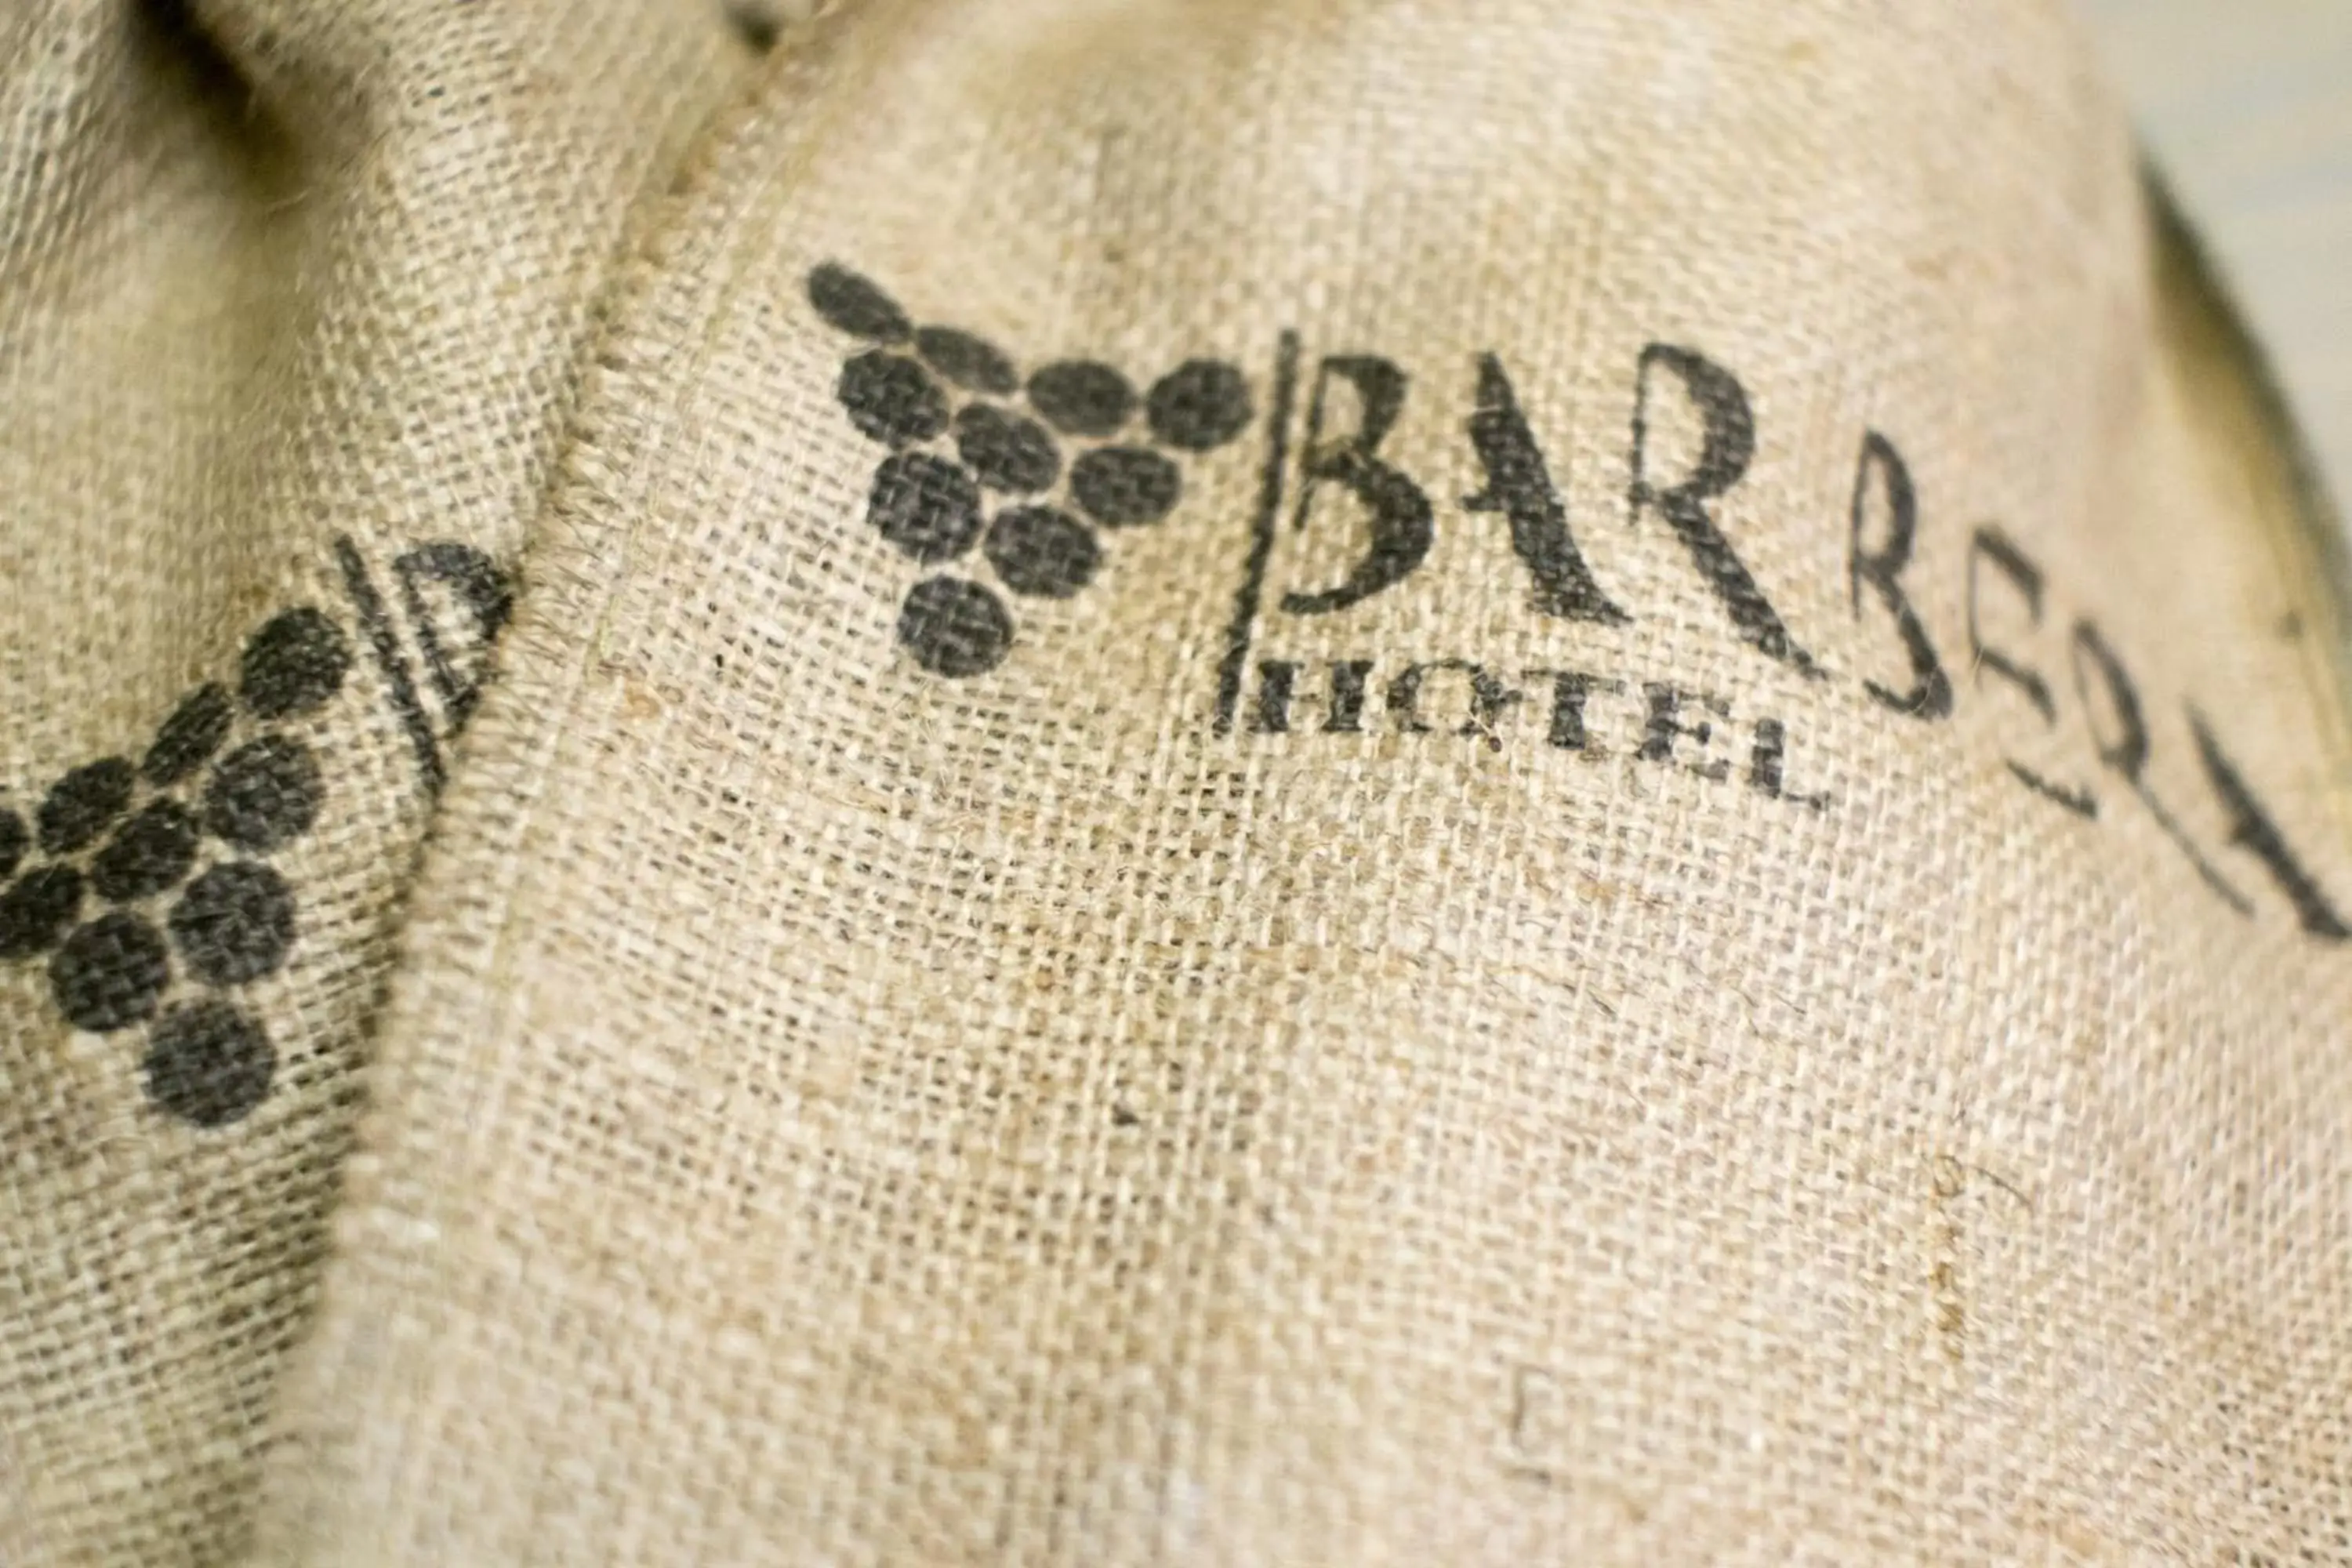 Property logo or sign in Barbera Hotel